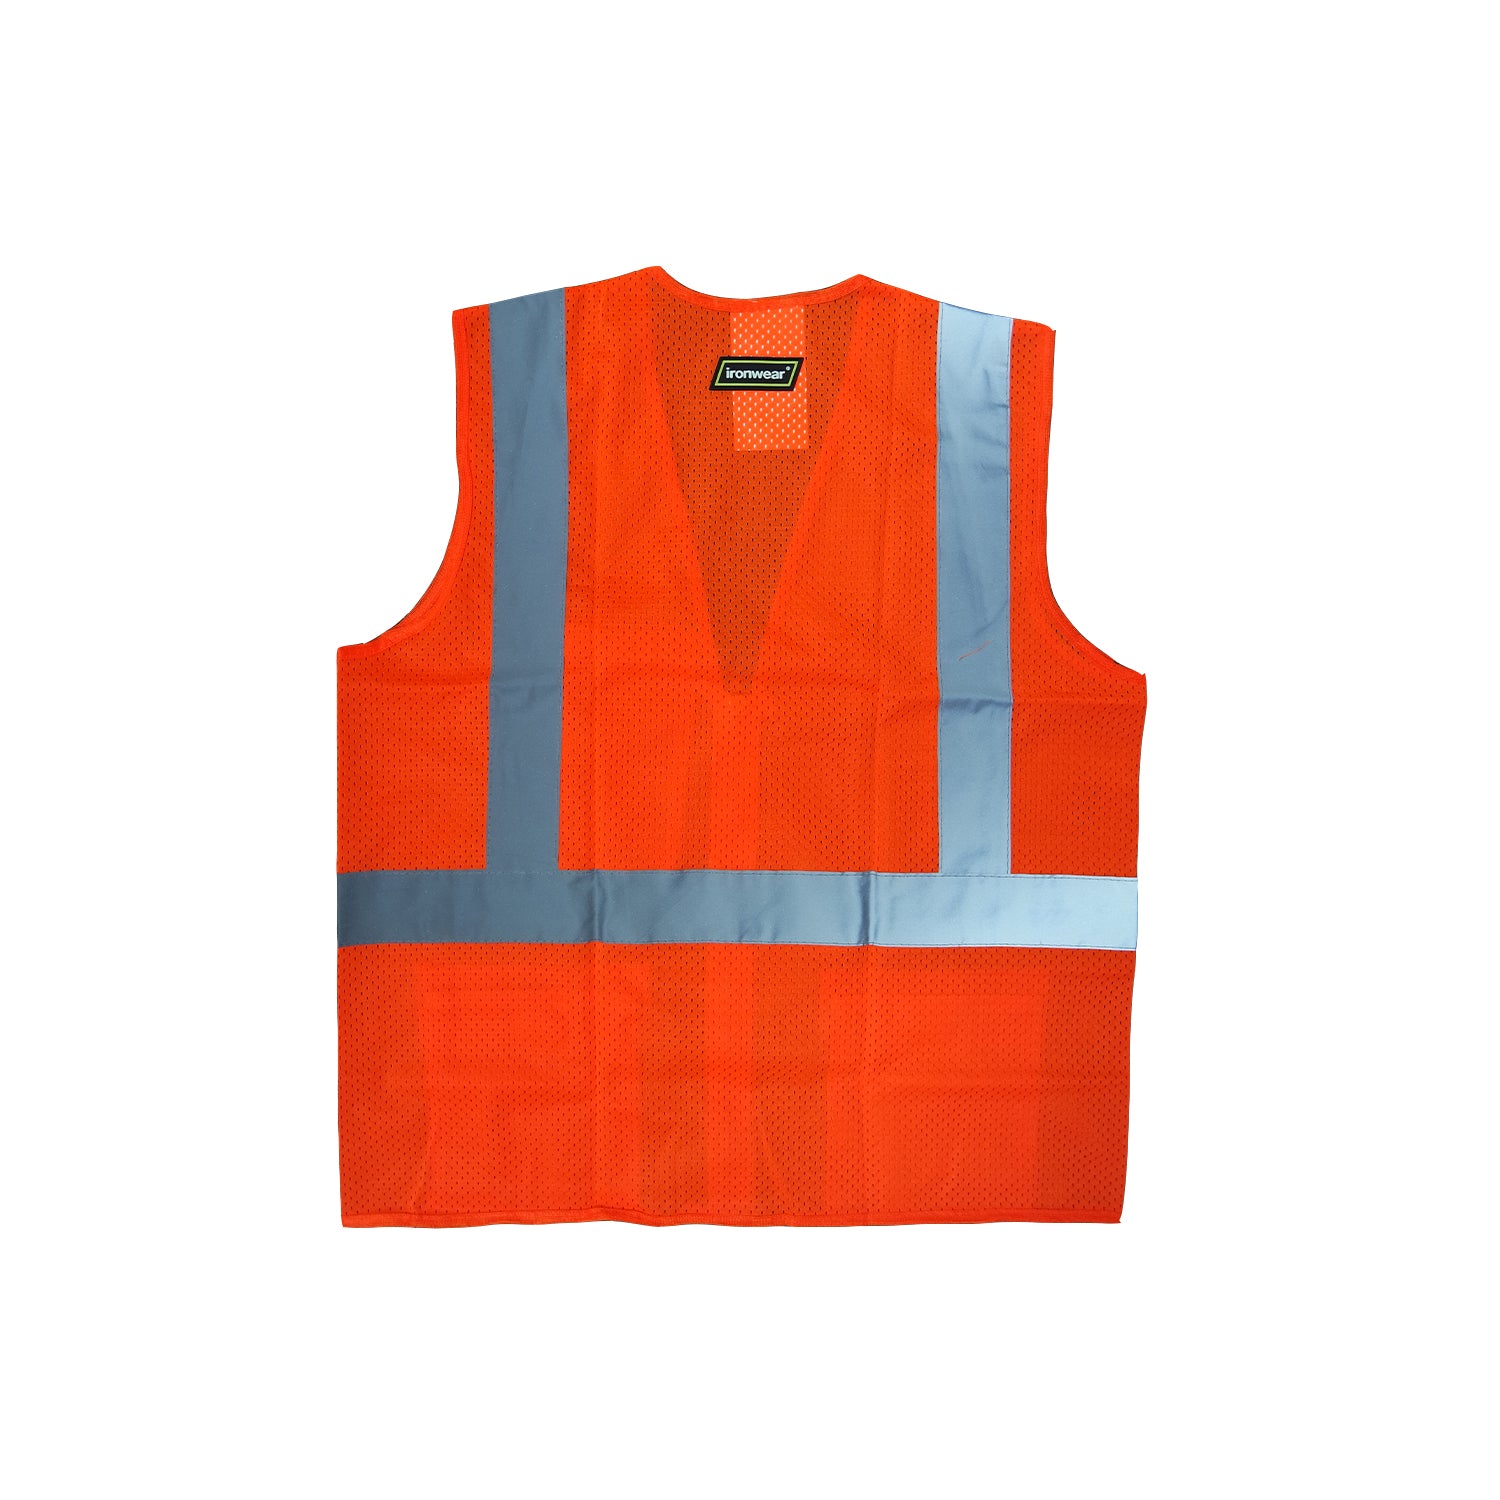 Ironwear Vest Orange 1284Z -Safety- eGPS Solutions Inc.